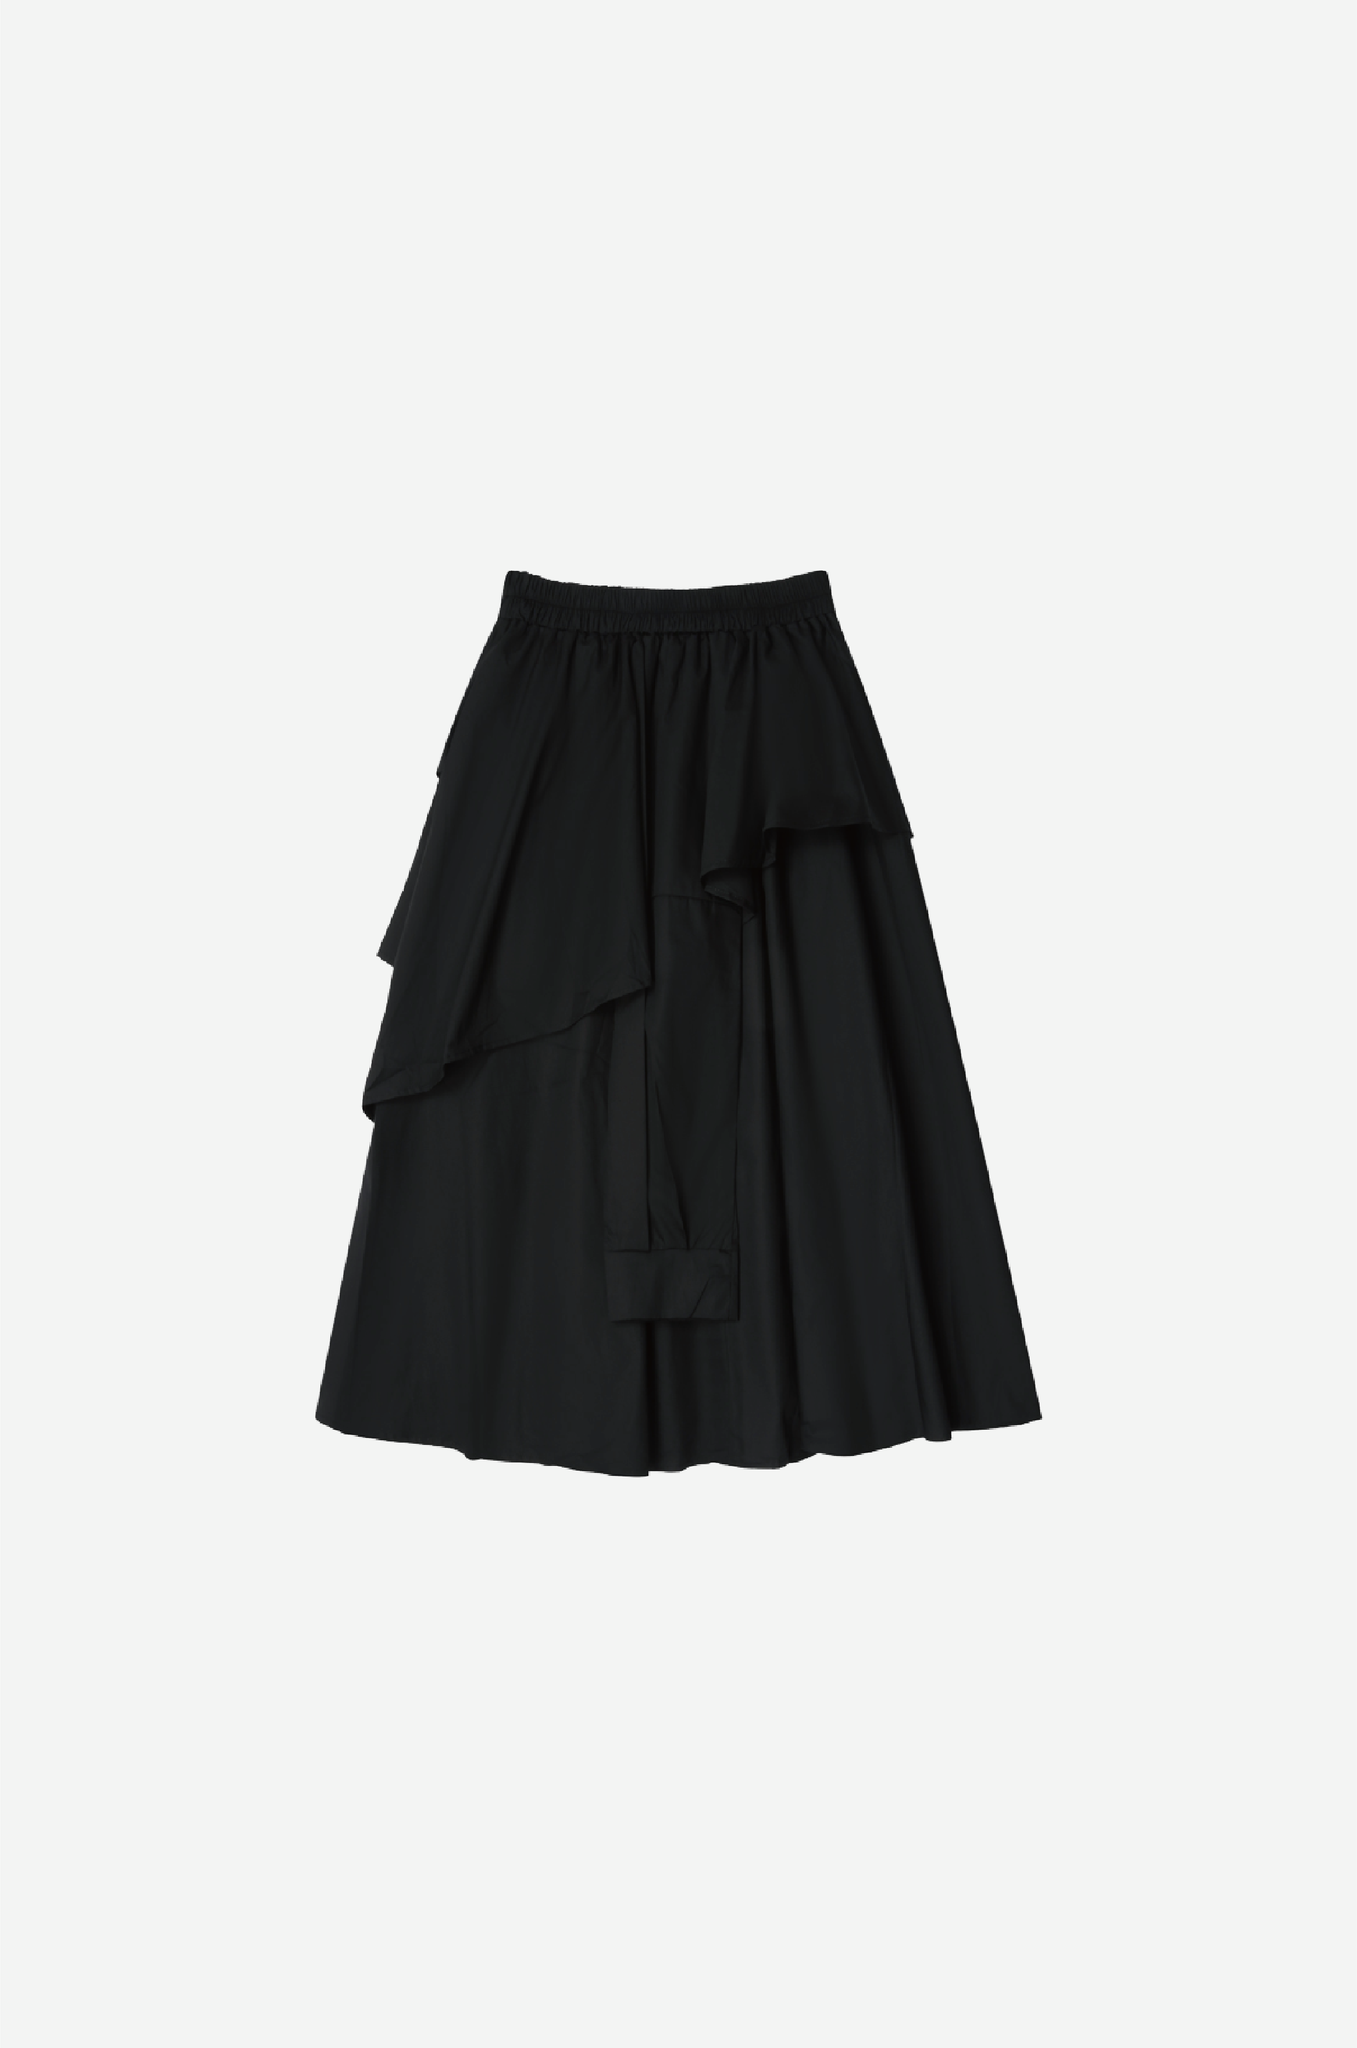 Distinctive Sleeve Motif Skirt